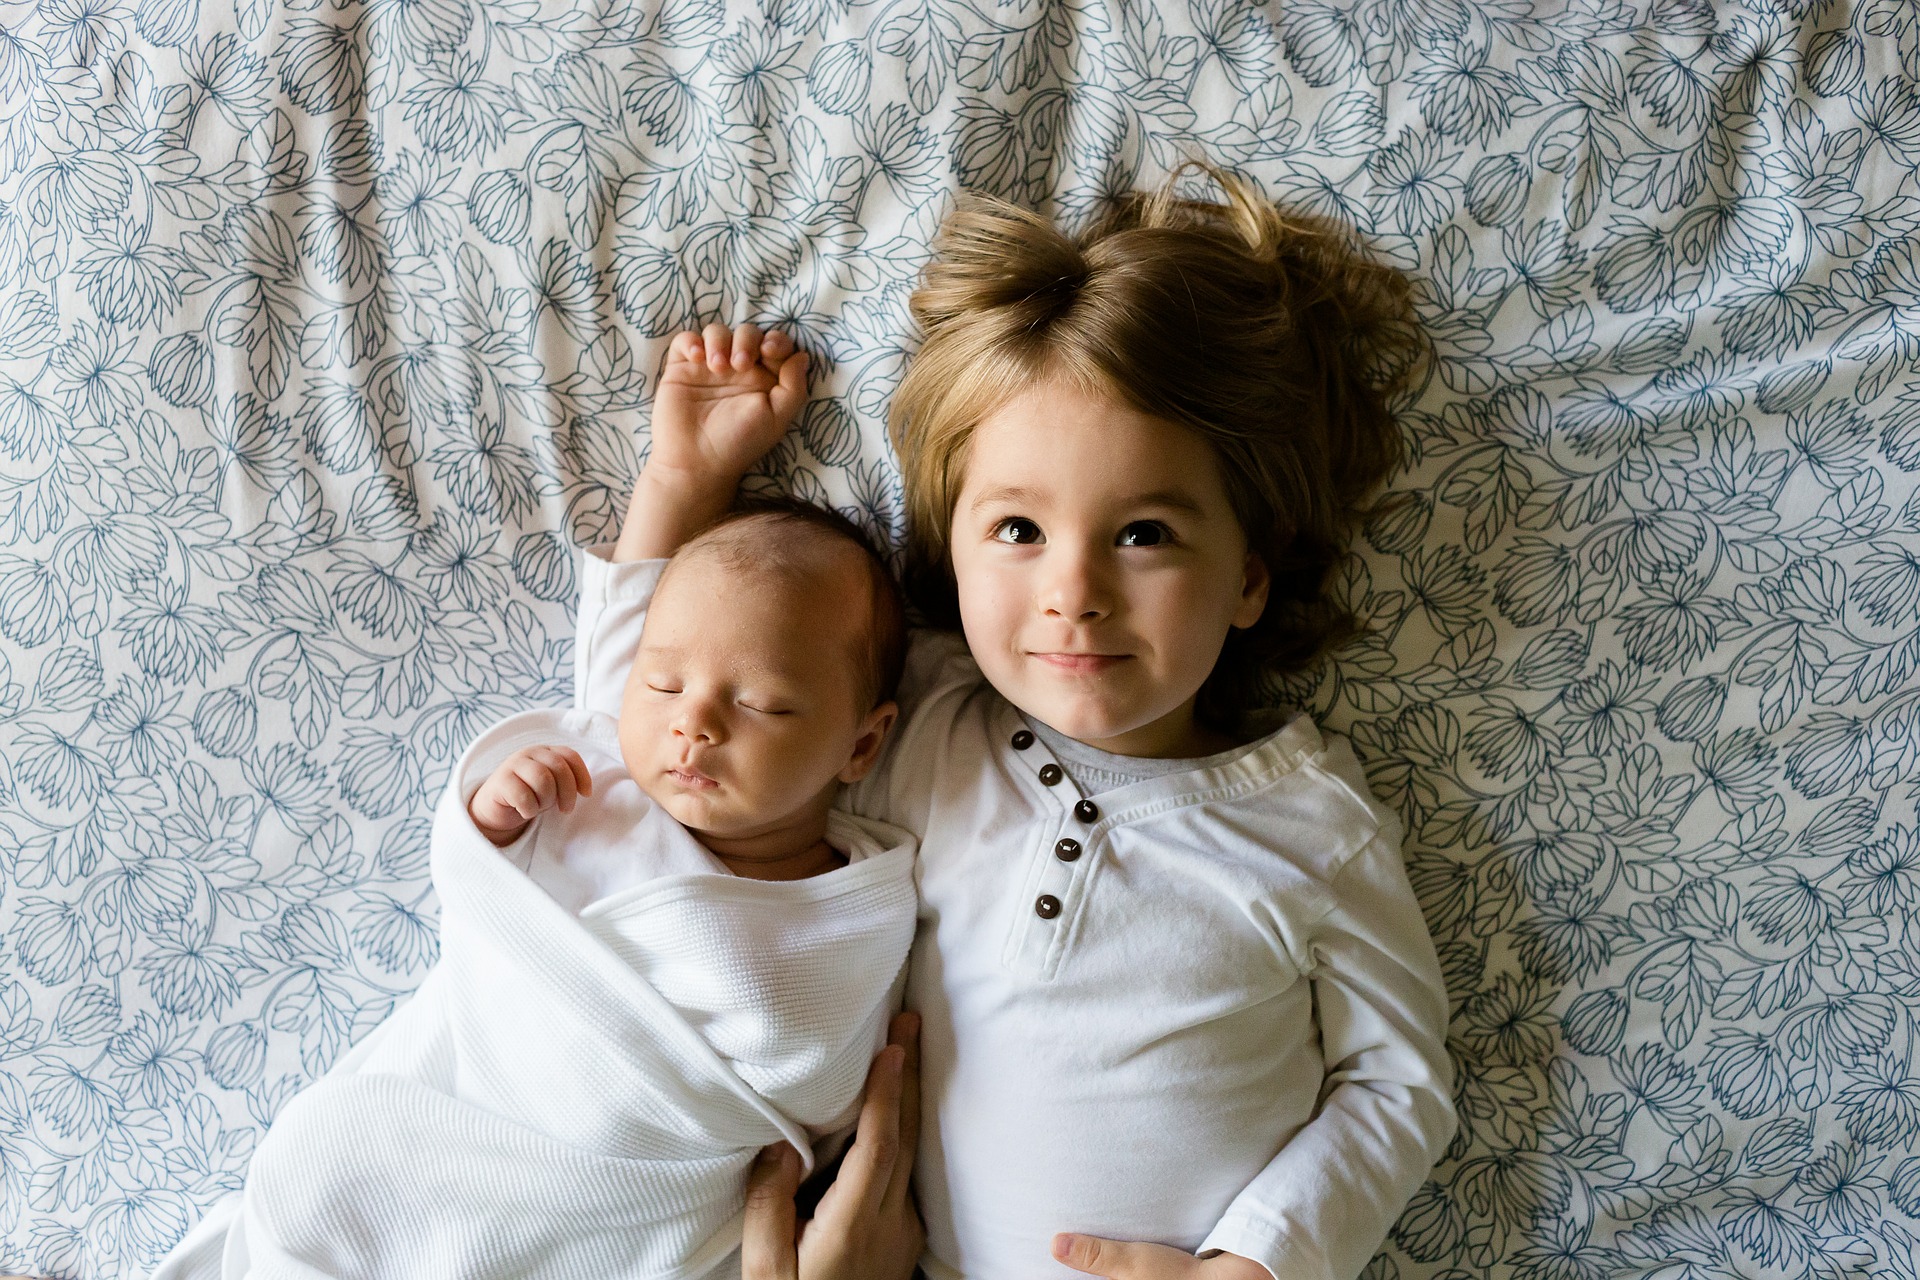 Siblings Day: 10 Reasons Why Siblings are the Best!